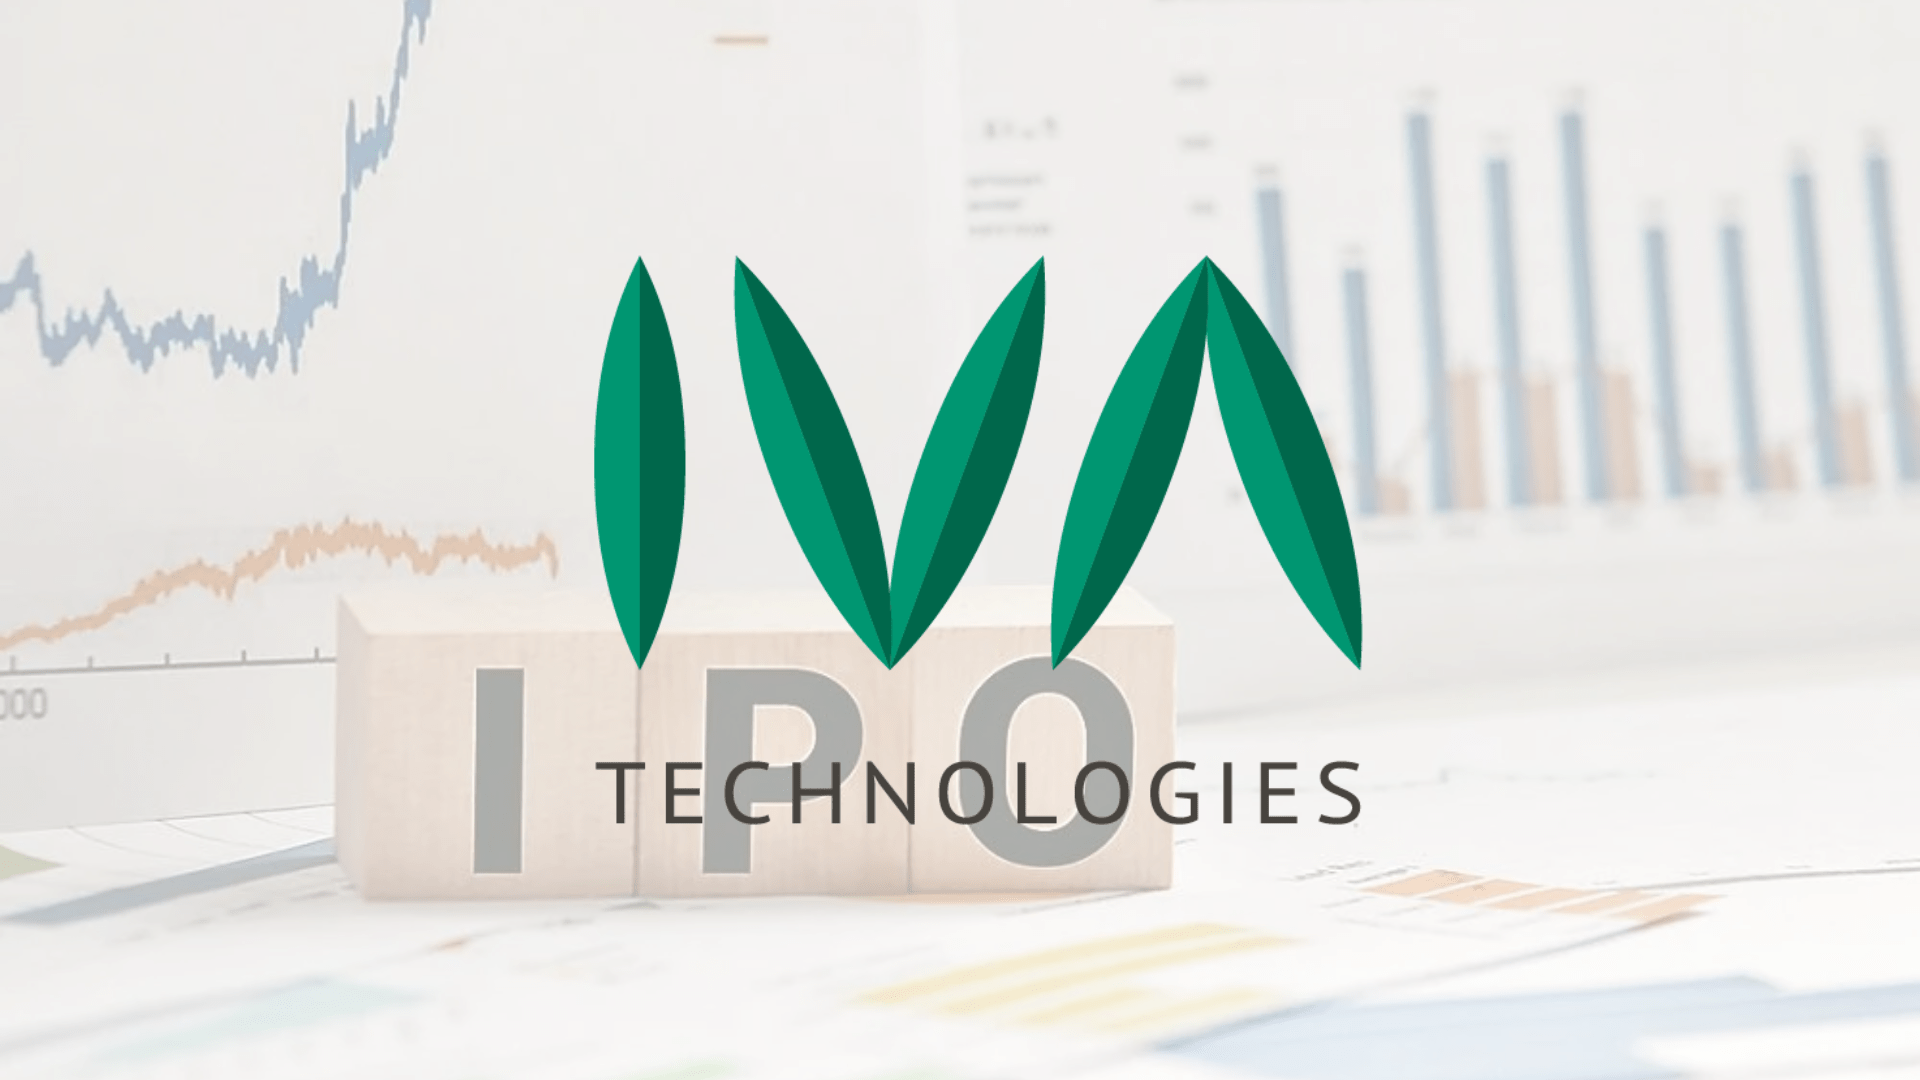 IVA Technologies объявила ценовой диапазон в рамках IPO на Мосбирже |  Компьютерра